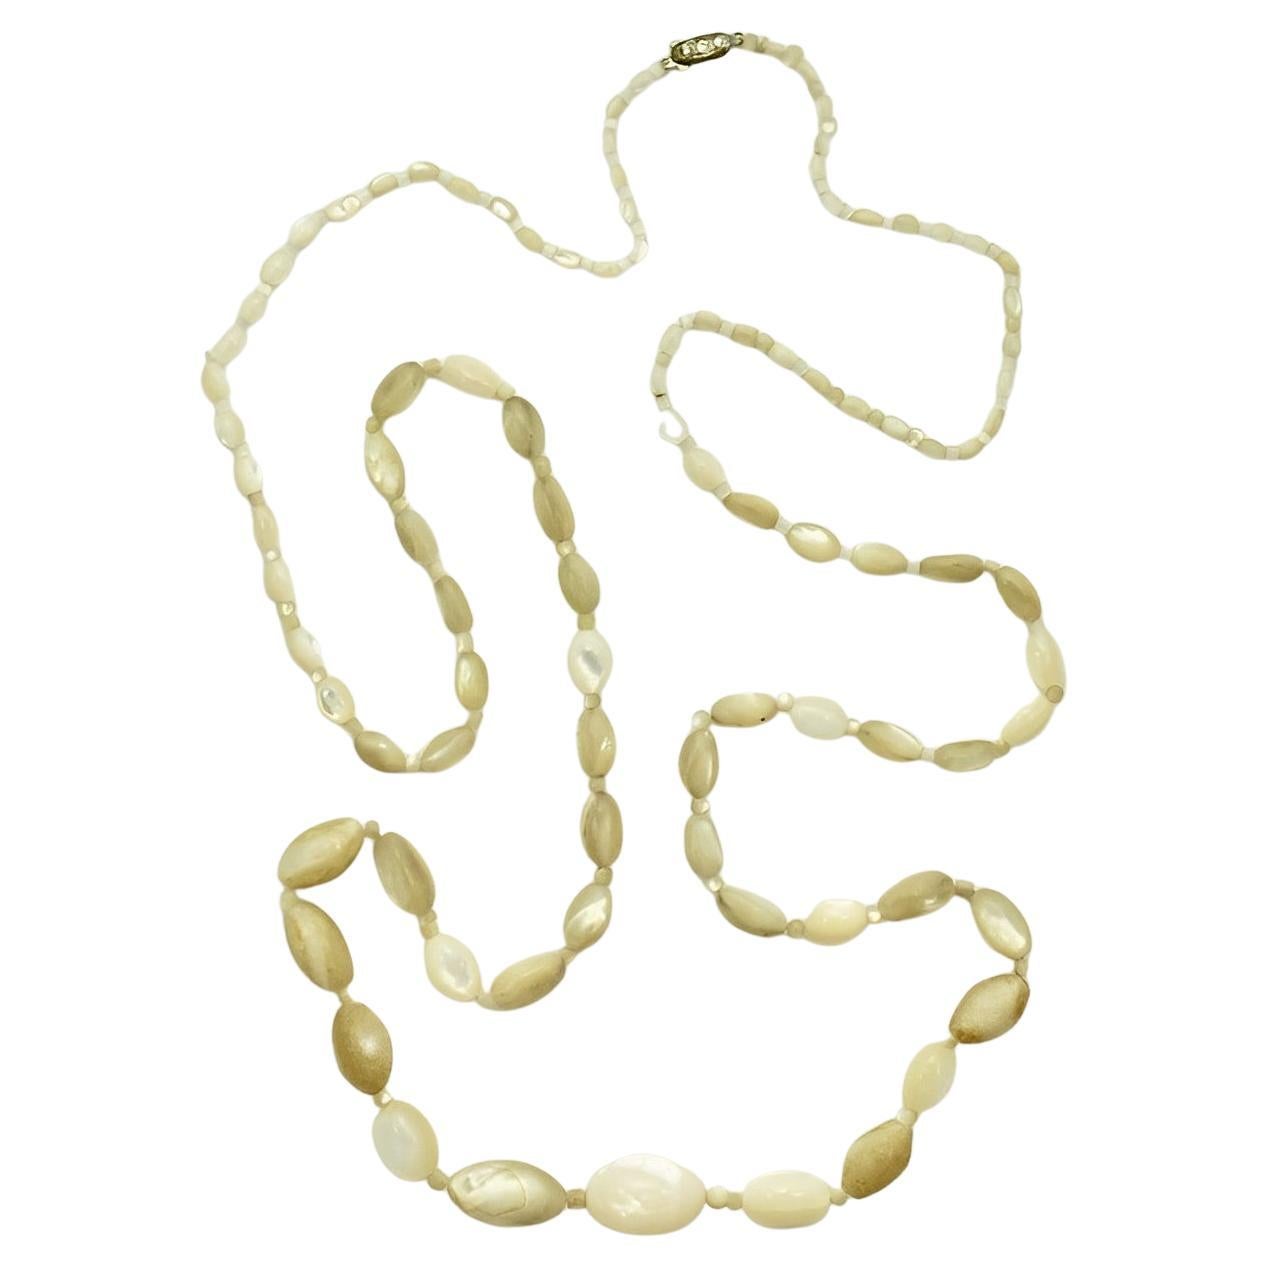 Long collier de perles en nacre en vente